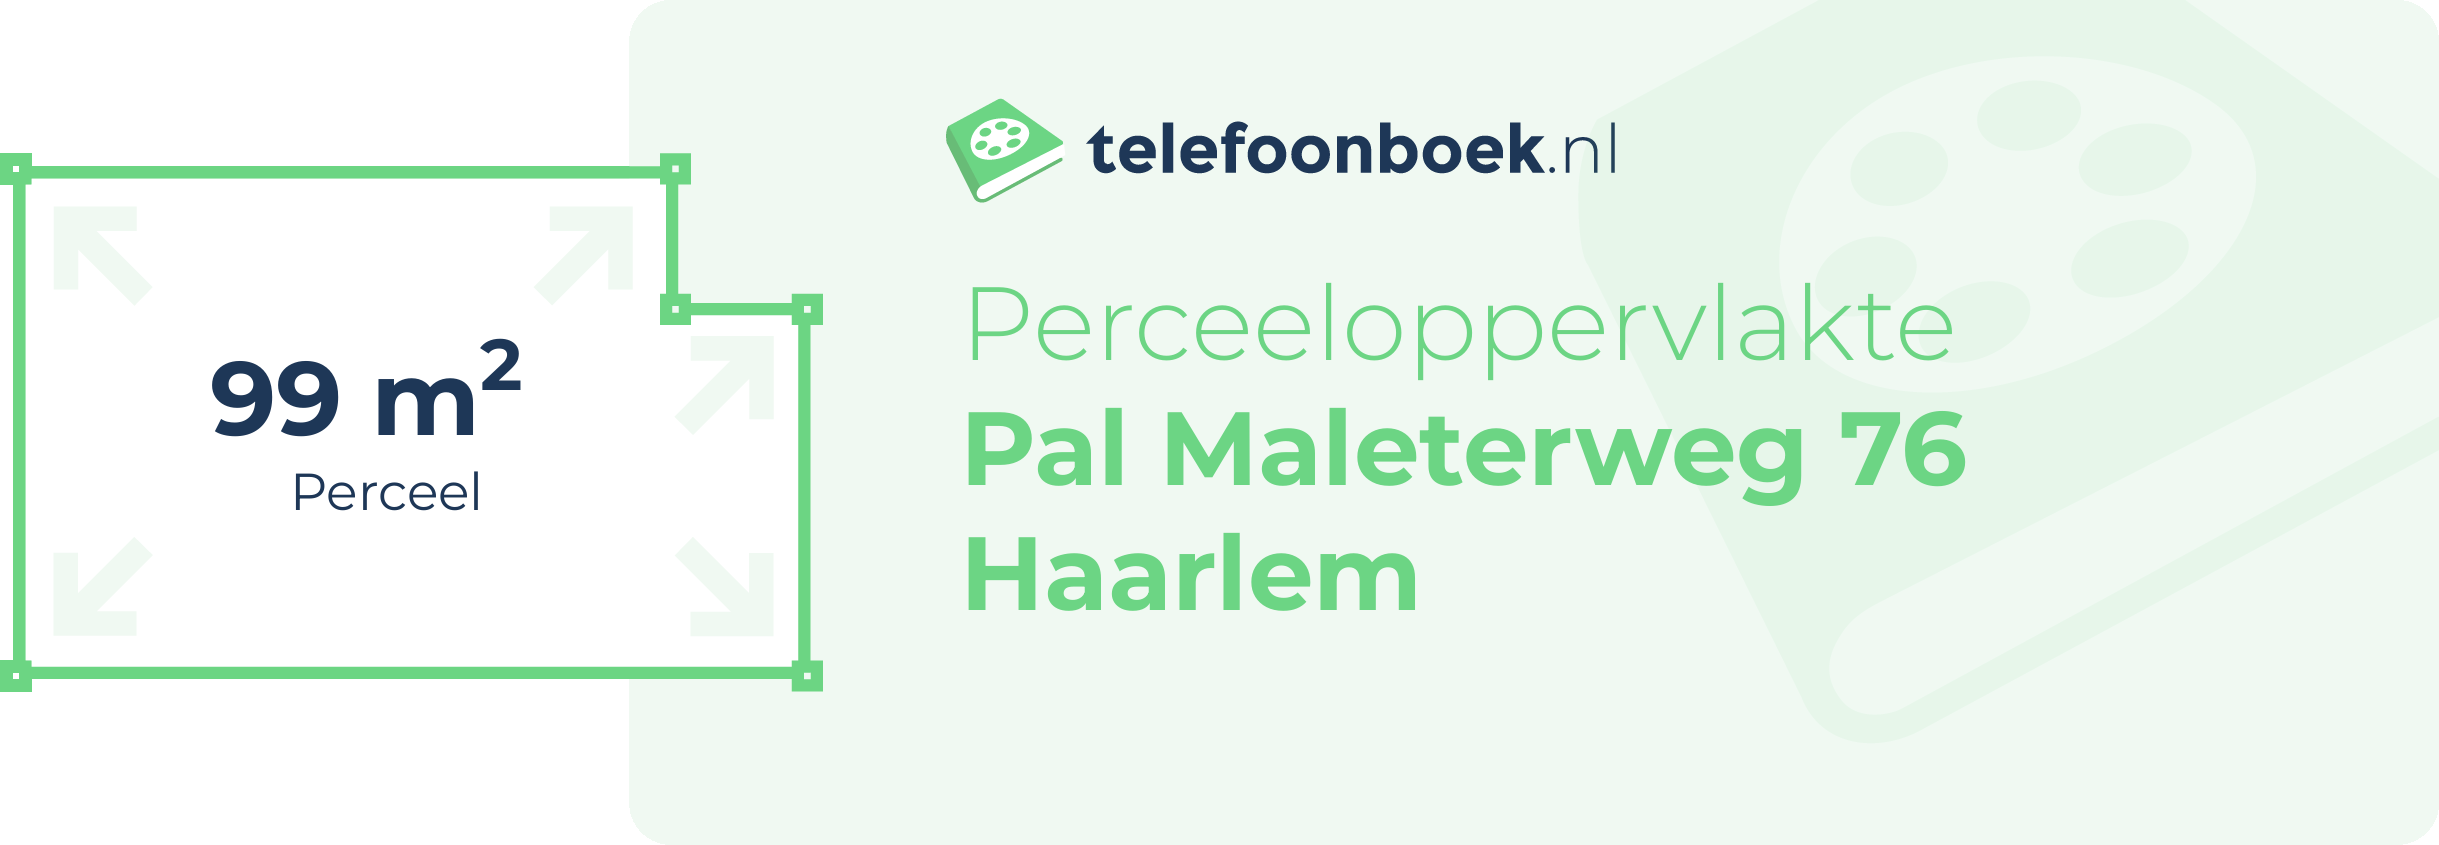 Perceeloppervlakte Pal Maleterweg 76 Haarlem